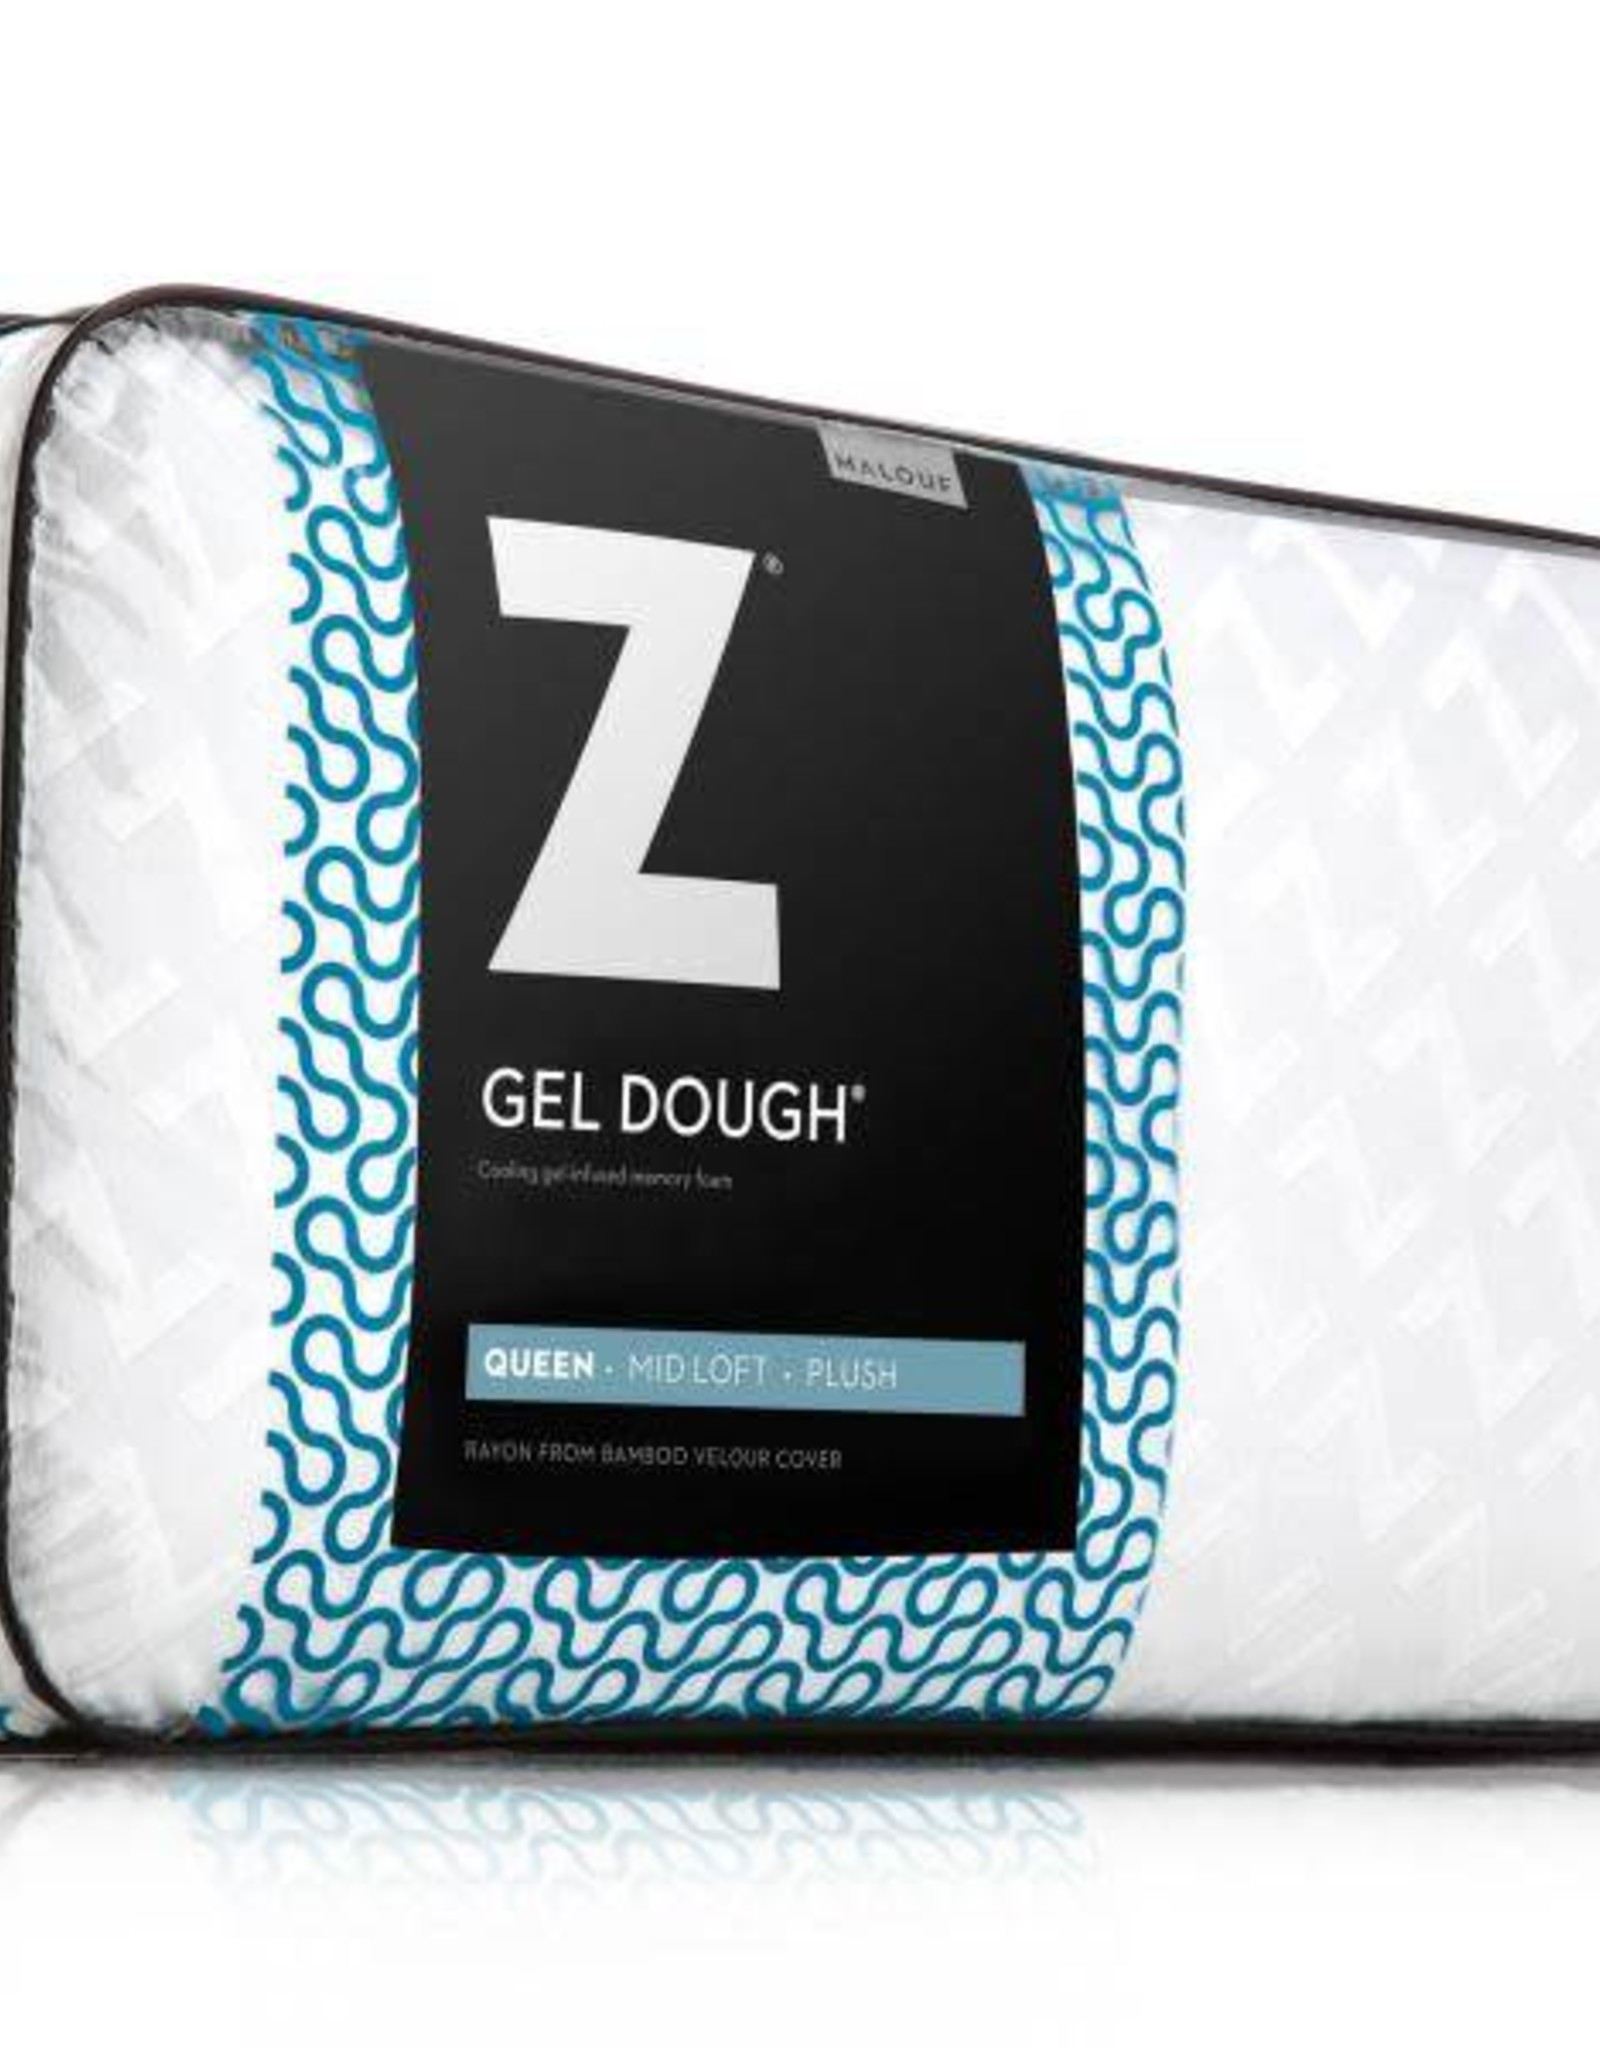 Malouf Z Gel Infused Dough Pillow - Mid Loft